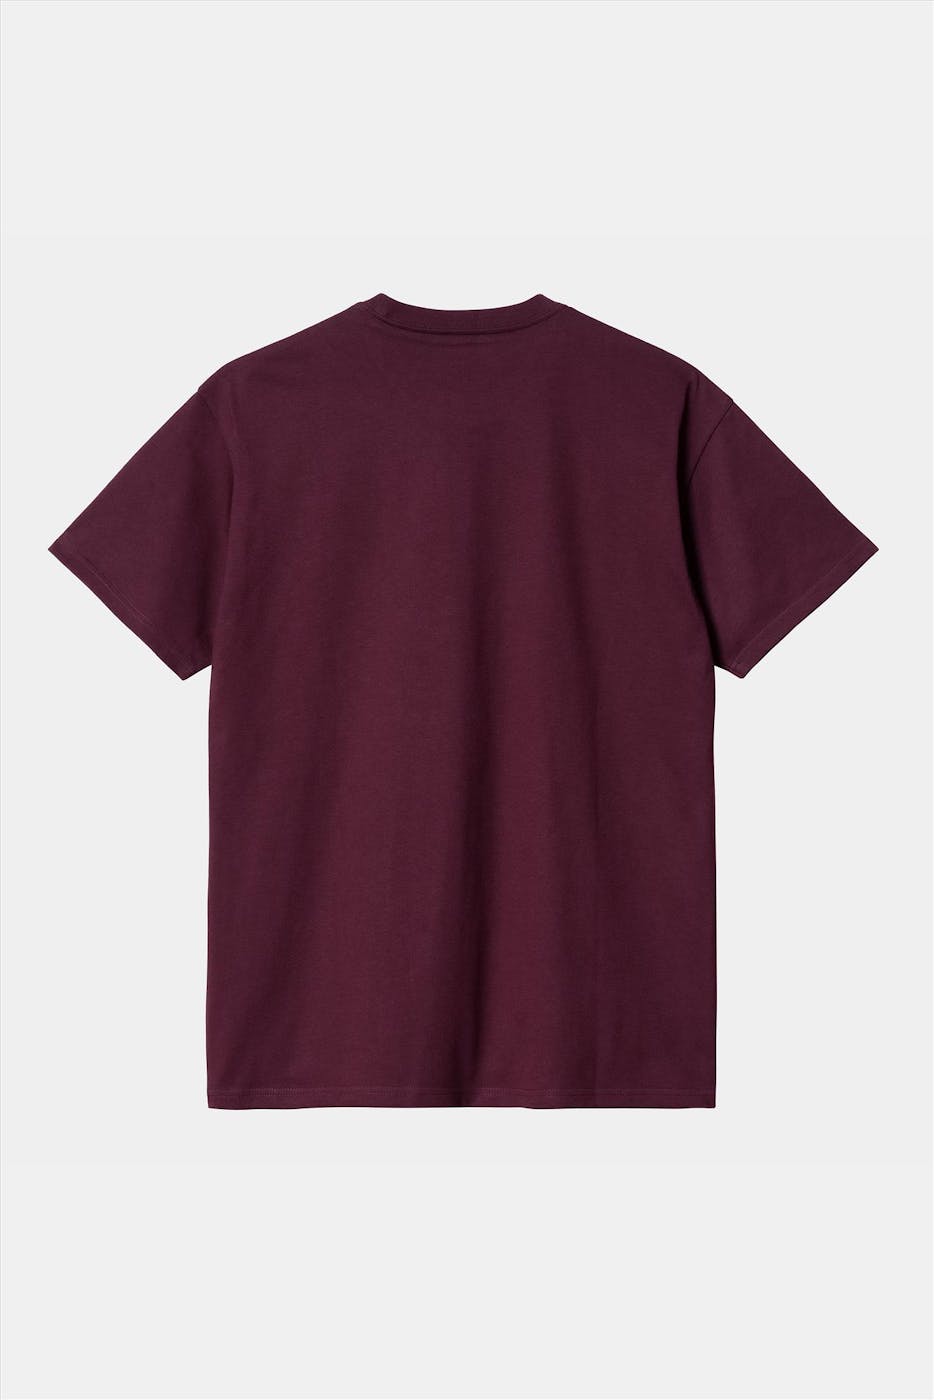 Carhartt WIP - Bordeaux Chase T-shirt